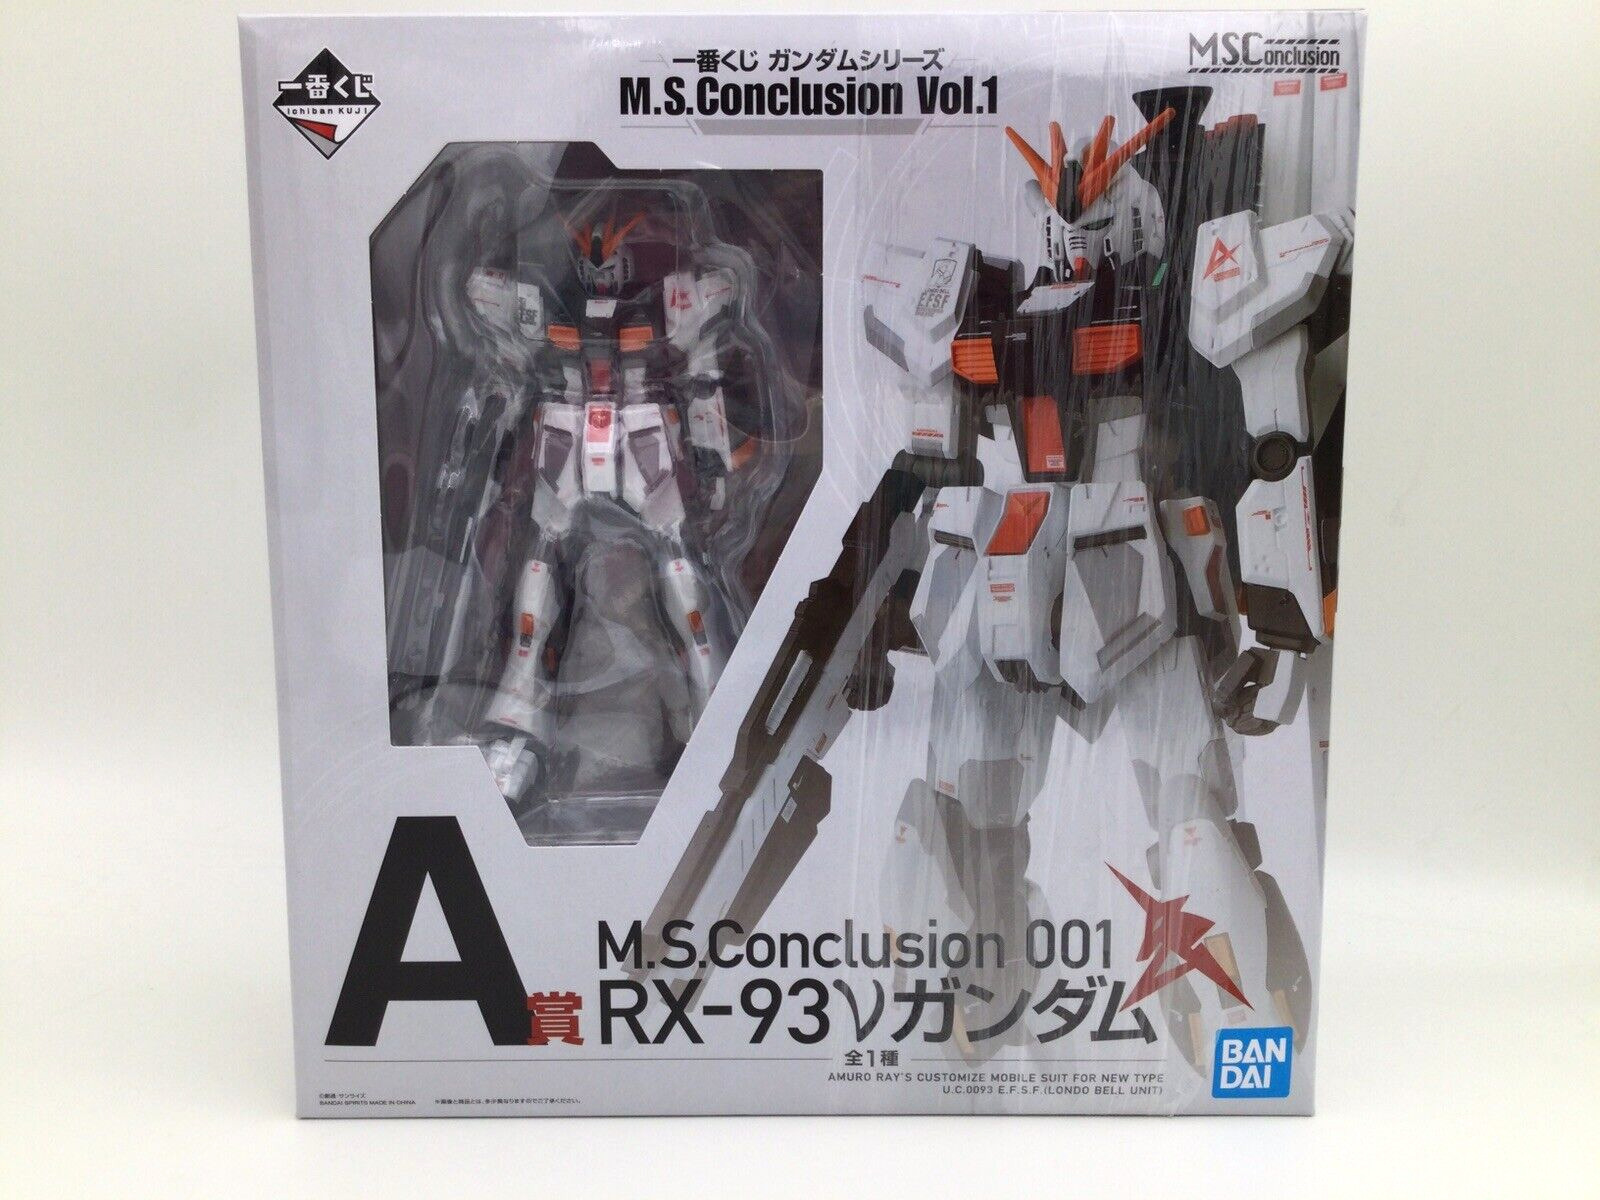 Ichiban Kuji Prize A M.S Conclusion 001 RX-93 Nu Gundam